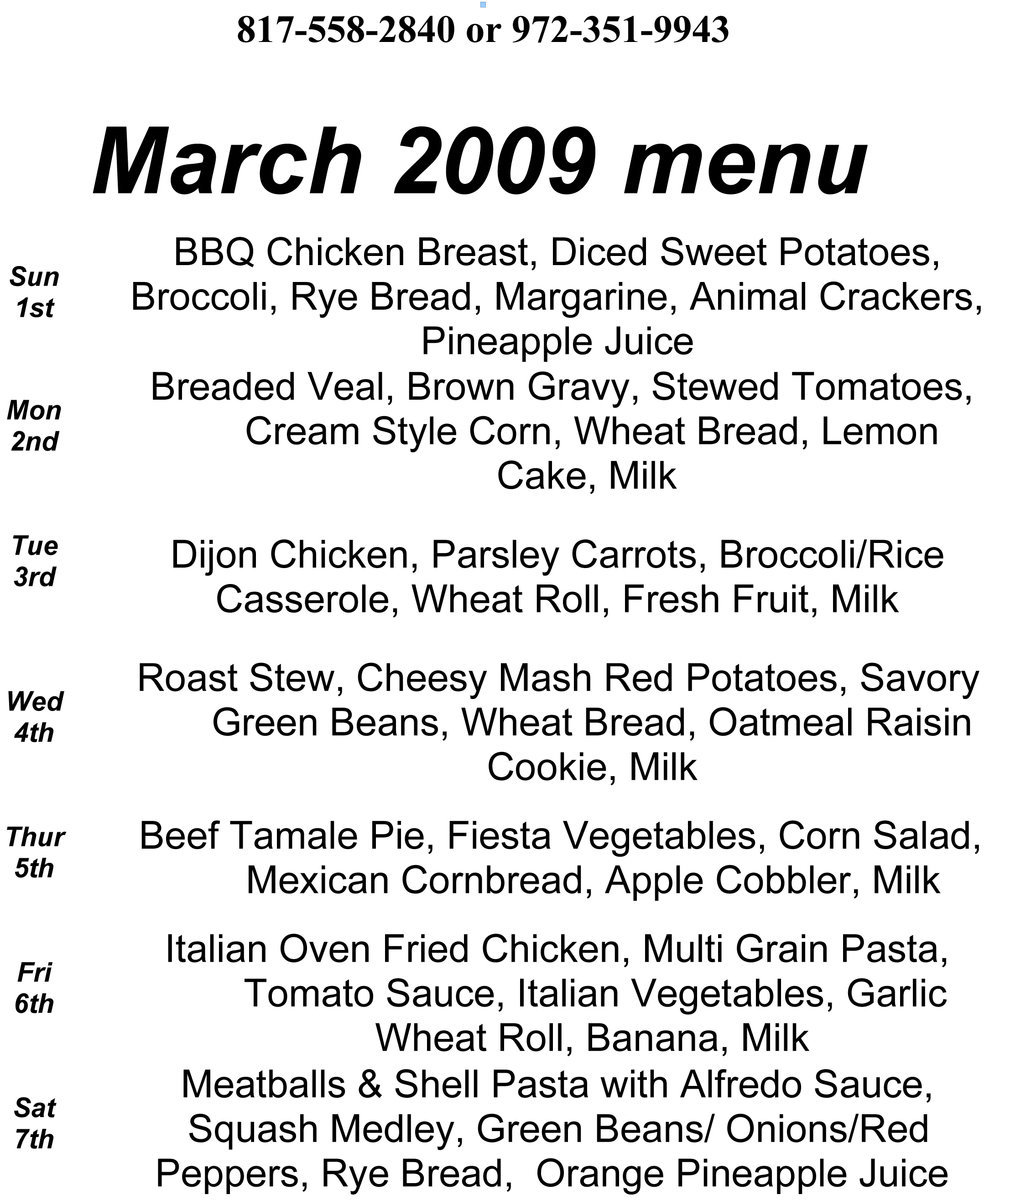 Image: March Meals-on-Wheels meal menu calendar